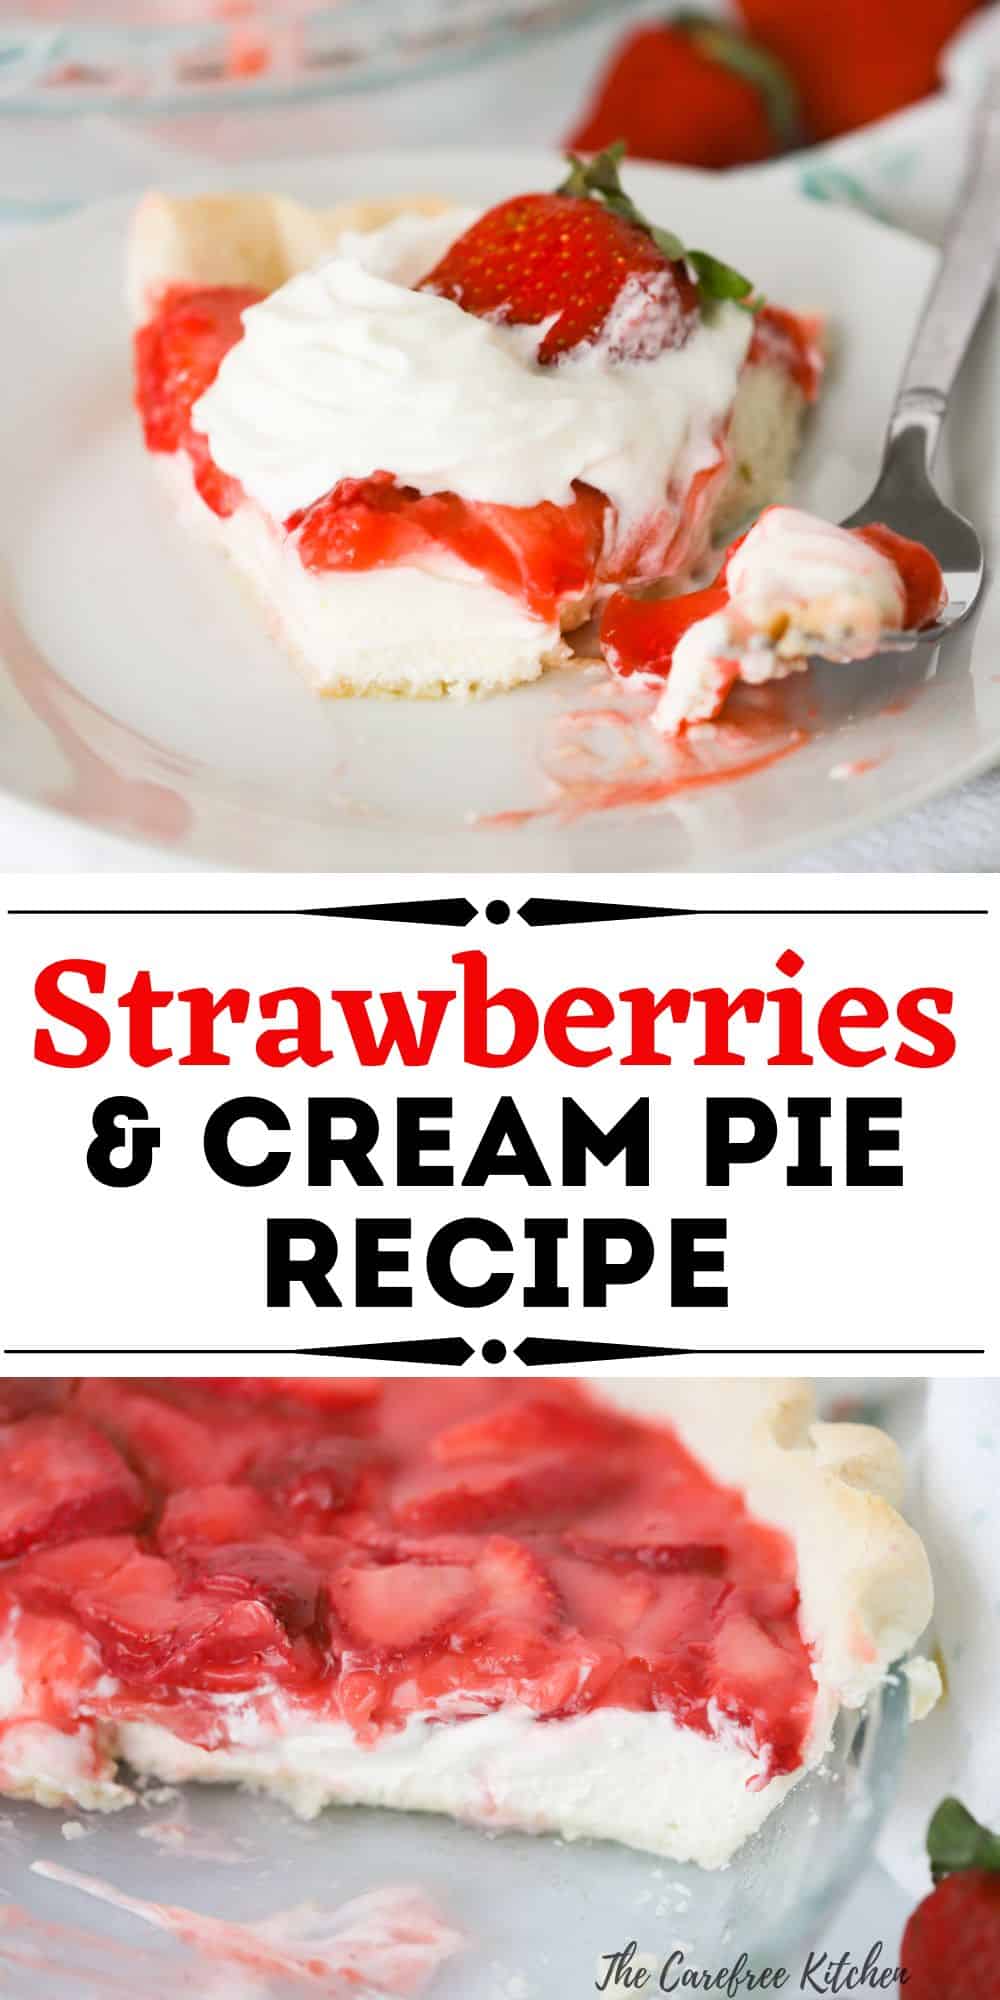 Strawberry Cream Pie Recipe - The Carefree Kitchen